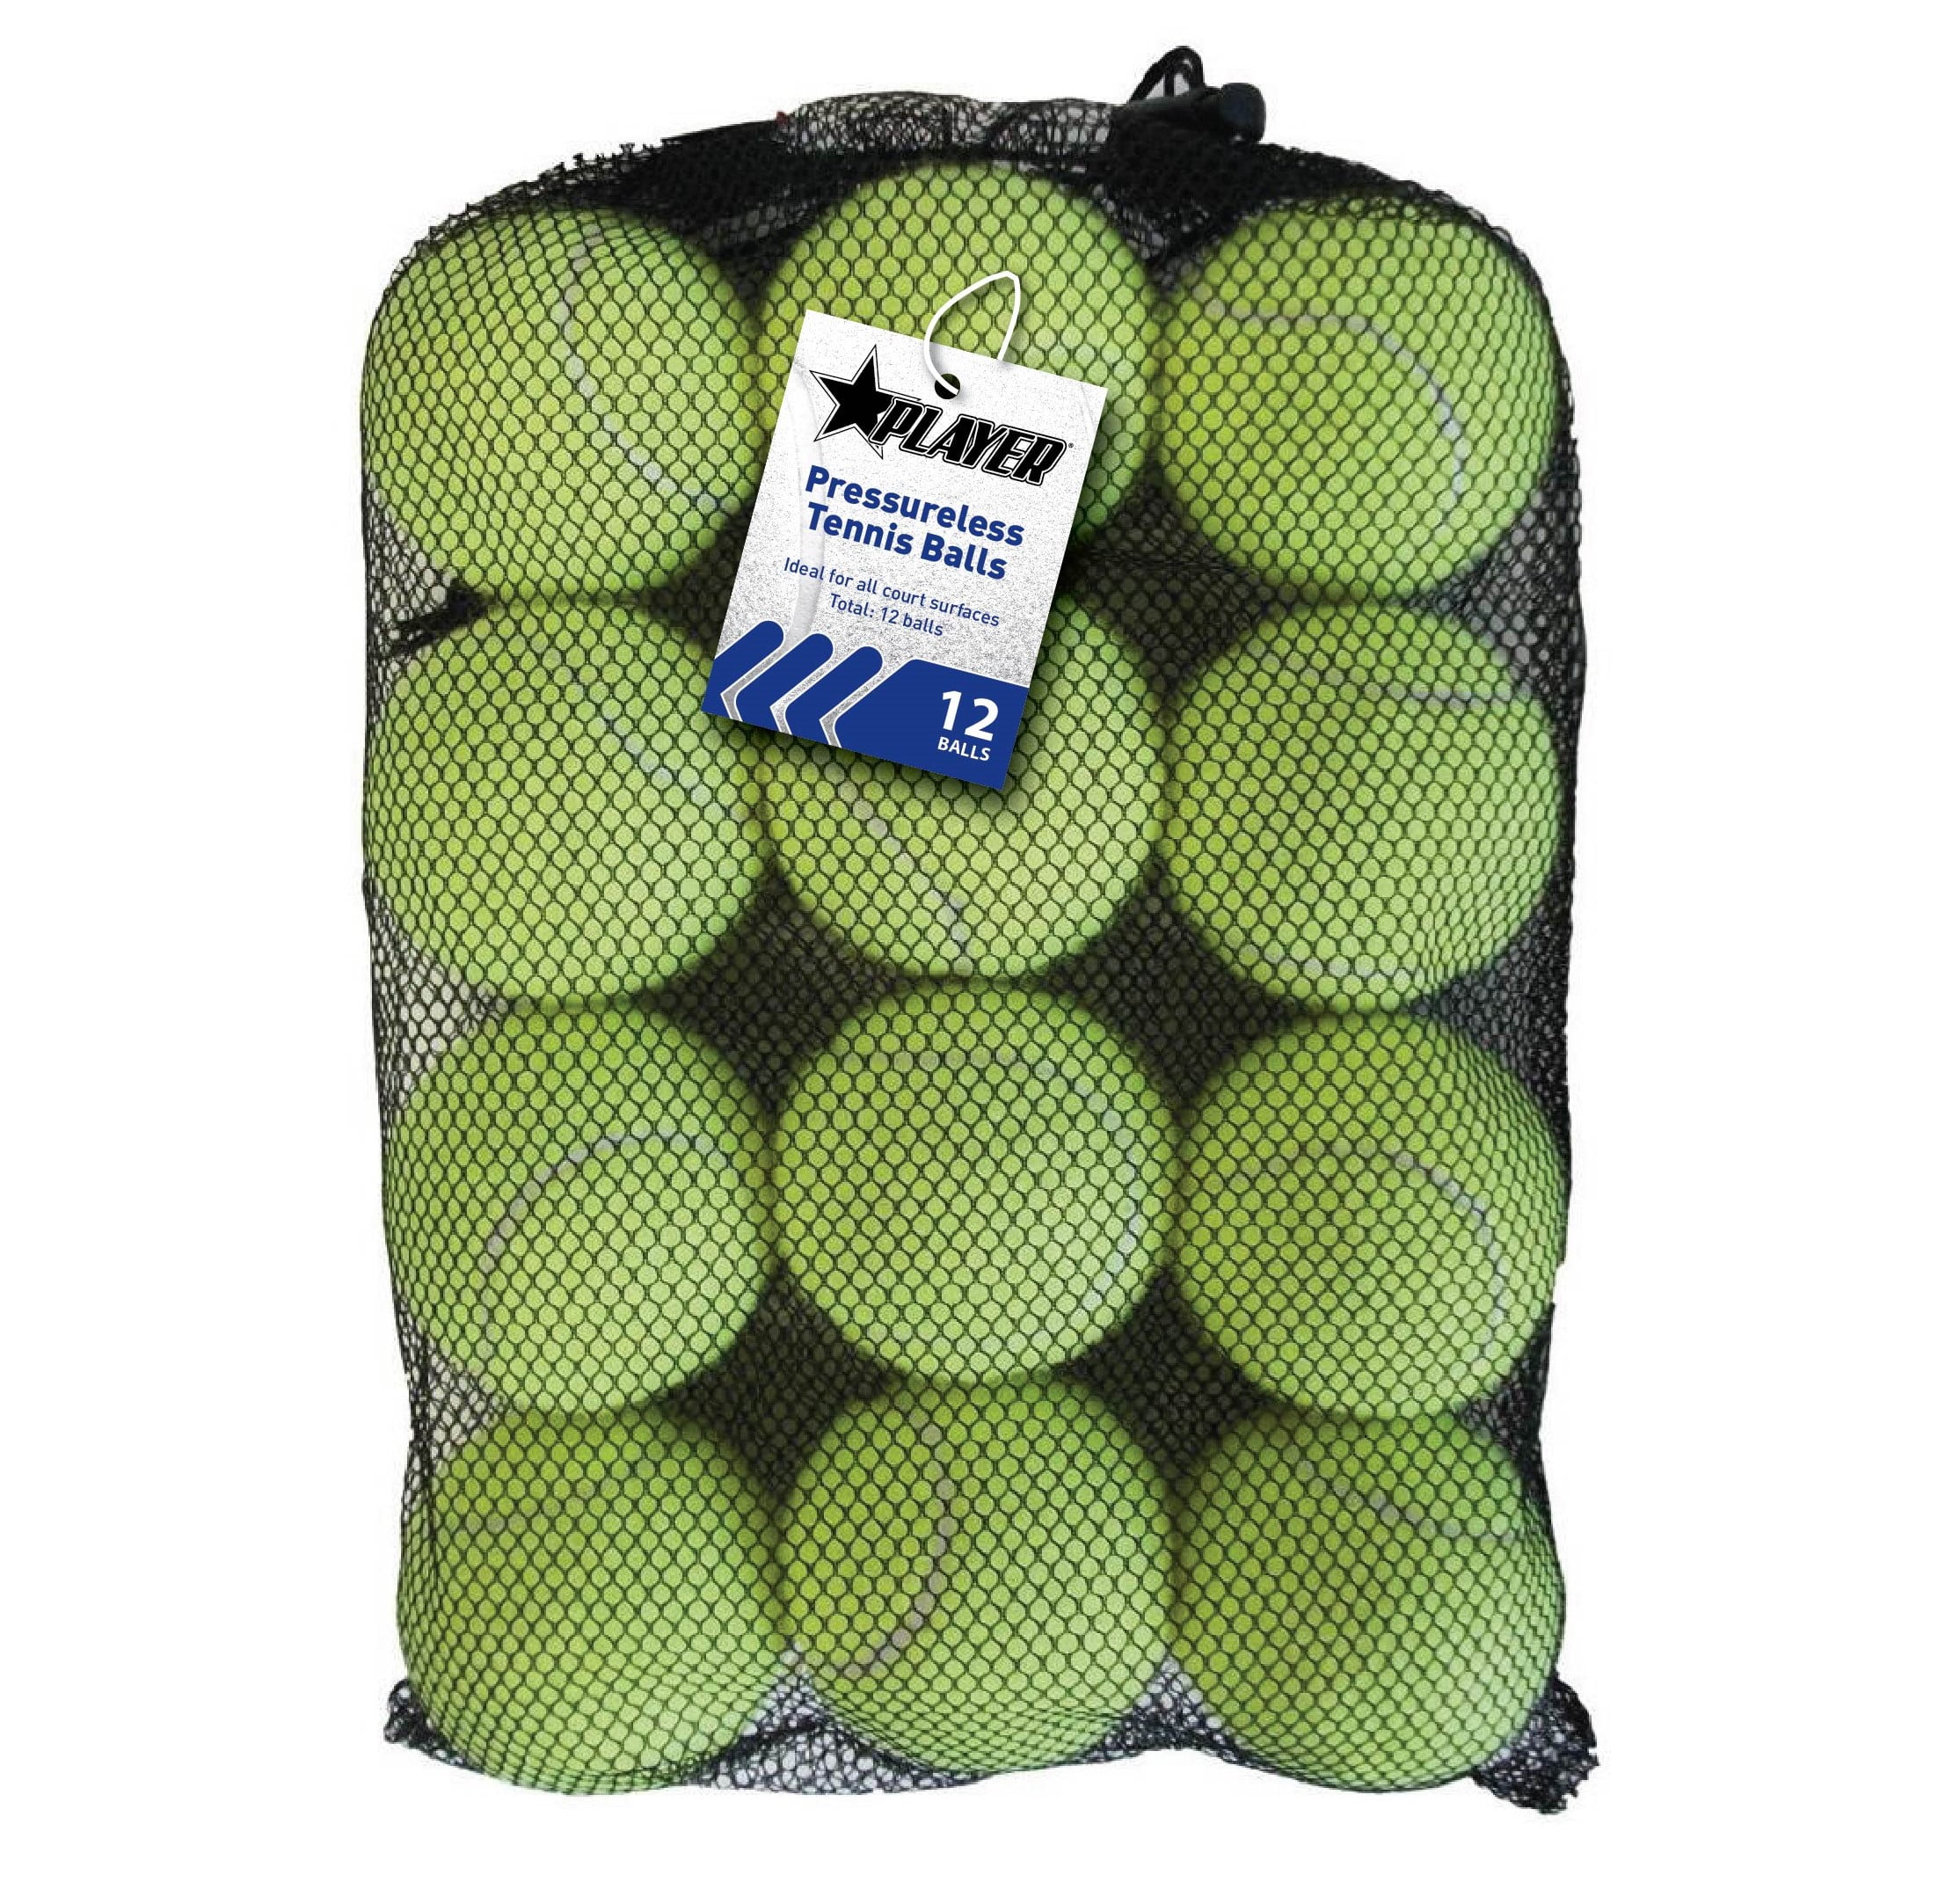 18 balls NEW Athletic Works Pressureless Tennis Balls 